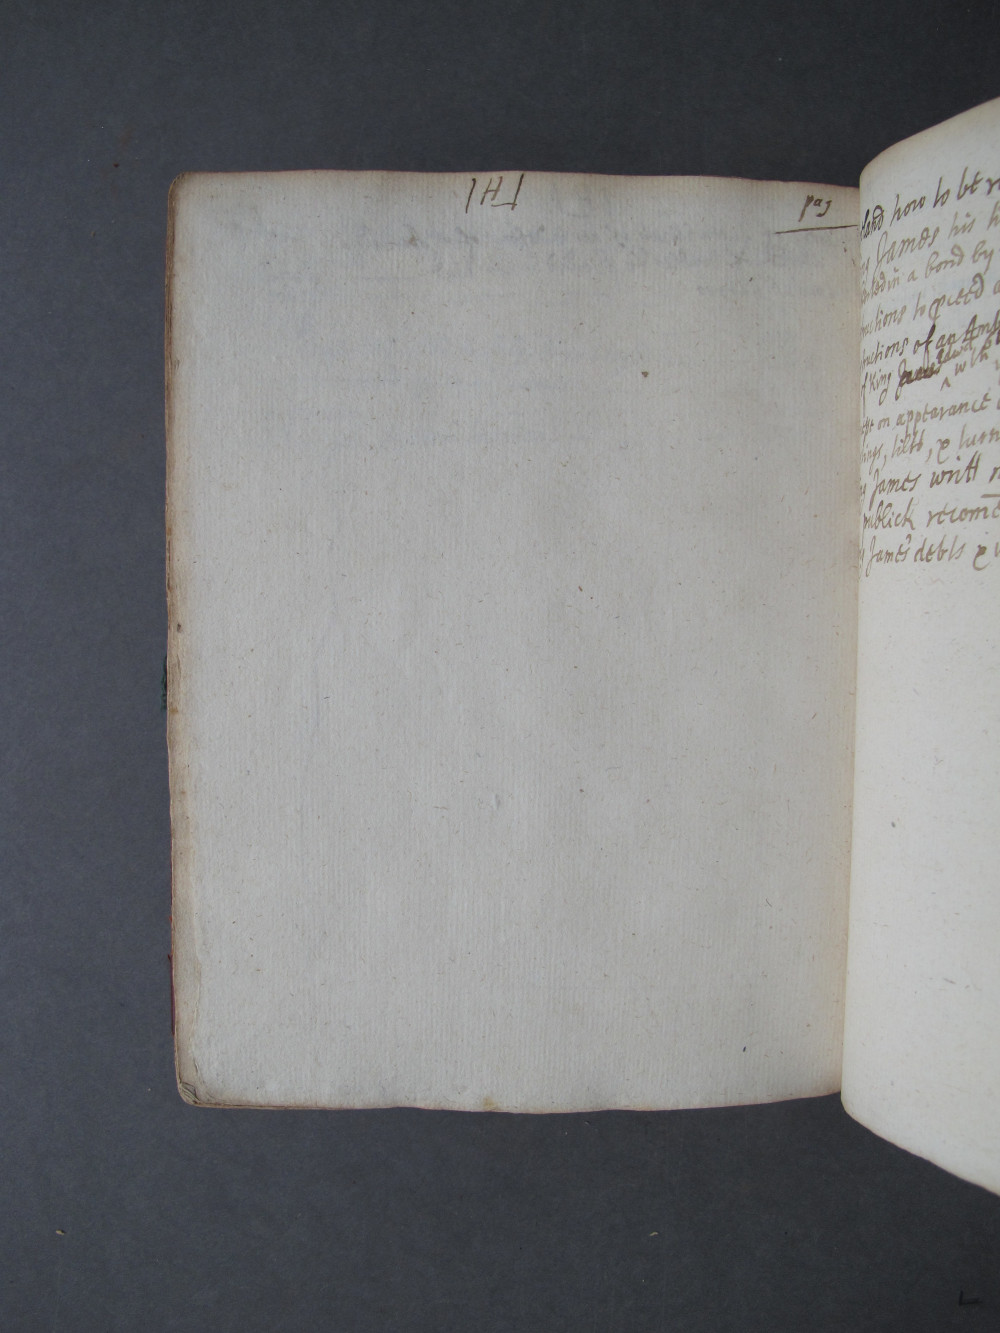 Folio 402 verso